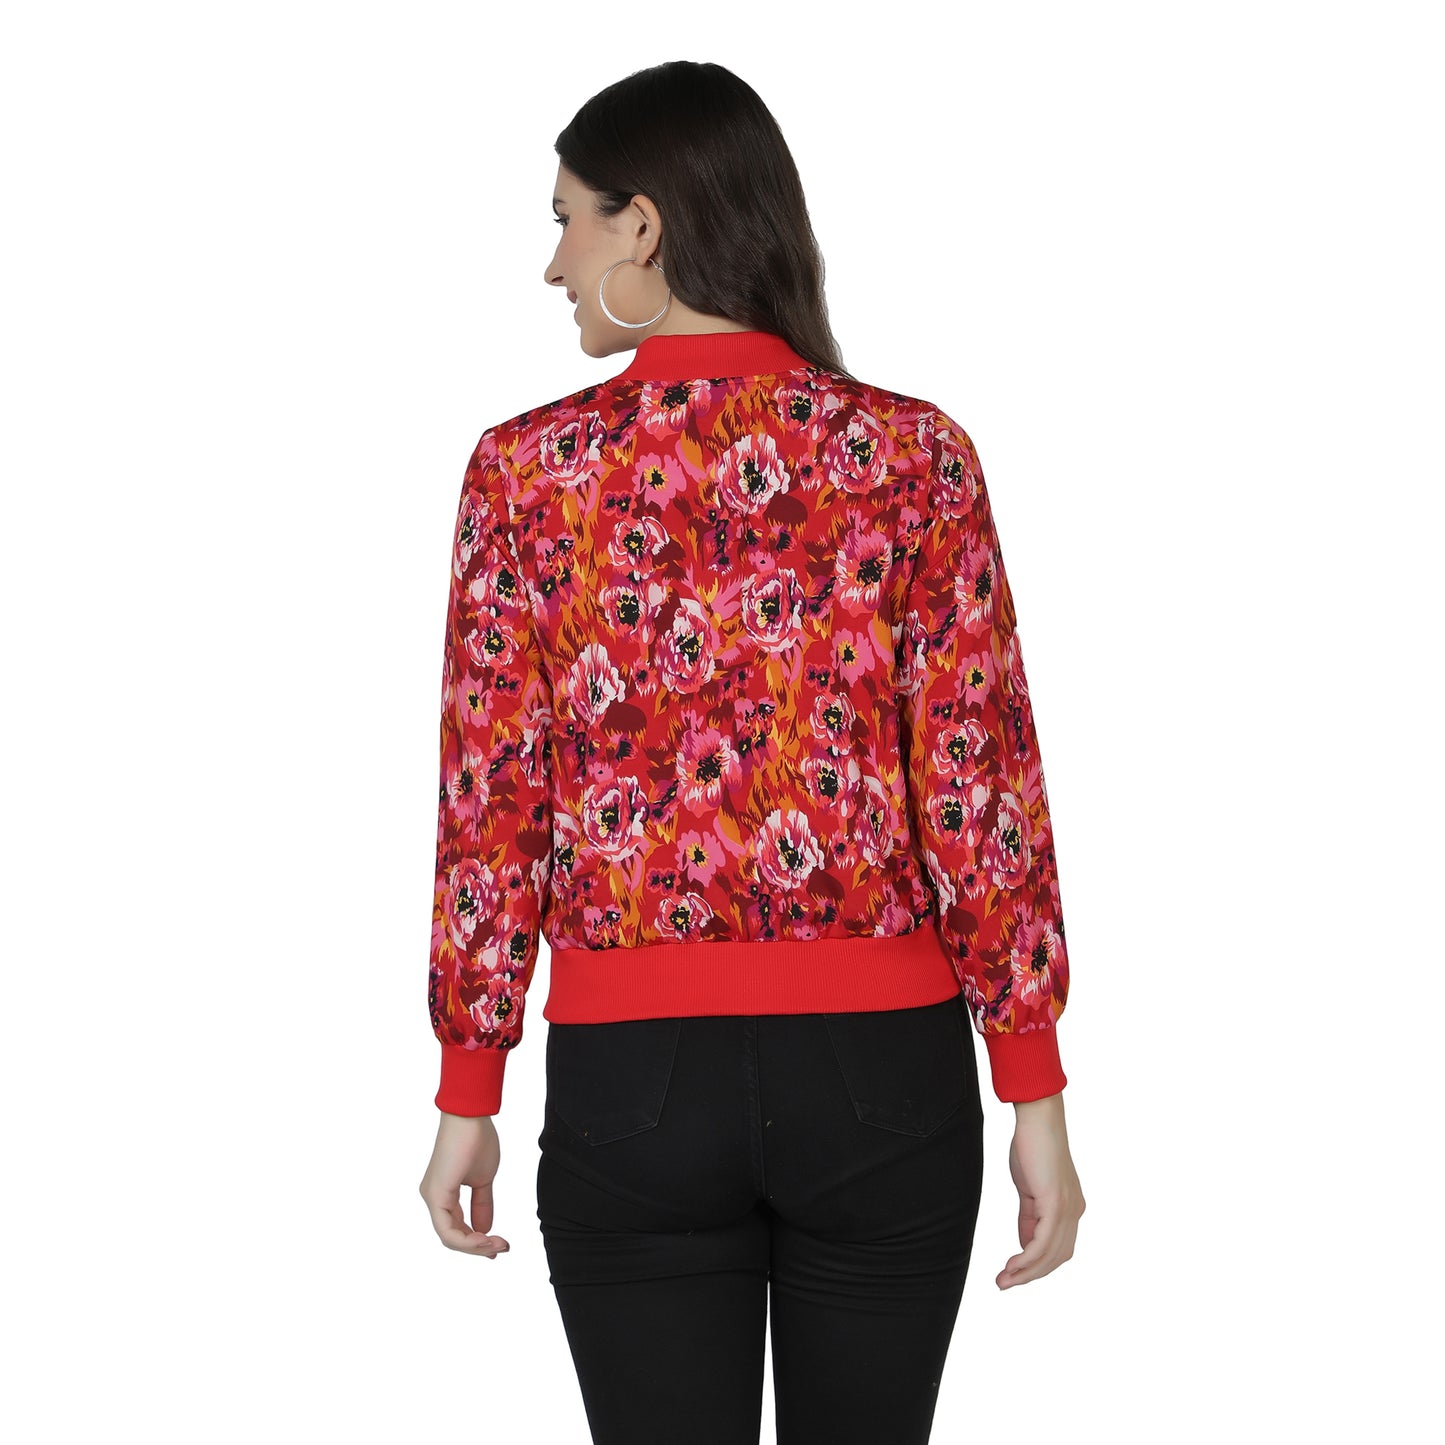 NUEVOSDAMAS Women Full sleeve Multi Floral Printed Bomber Jacket